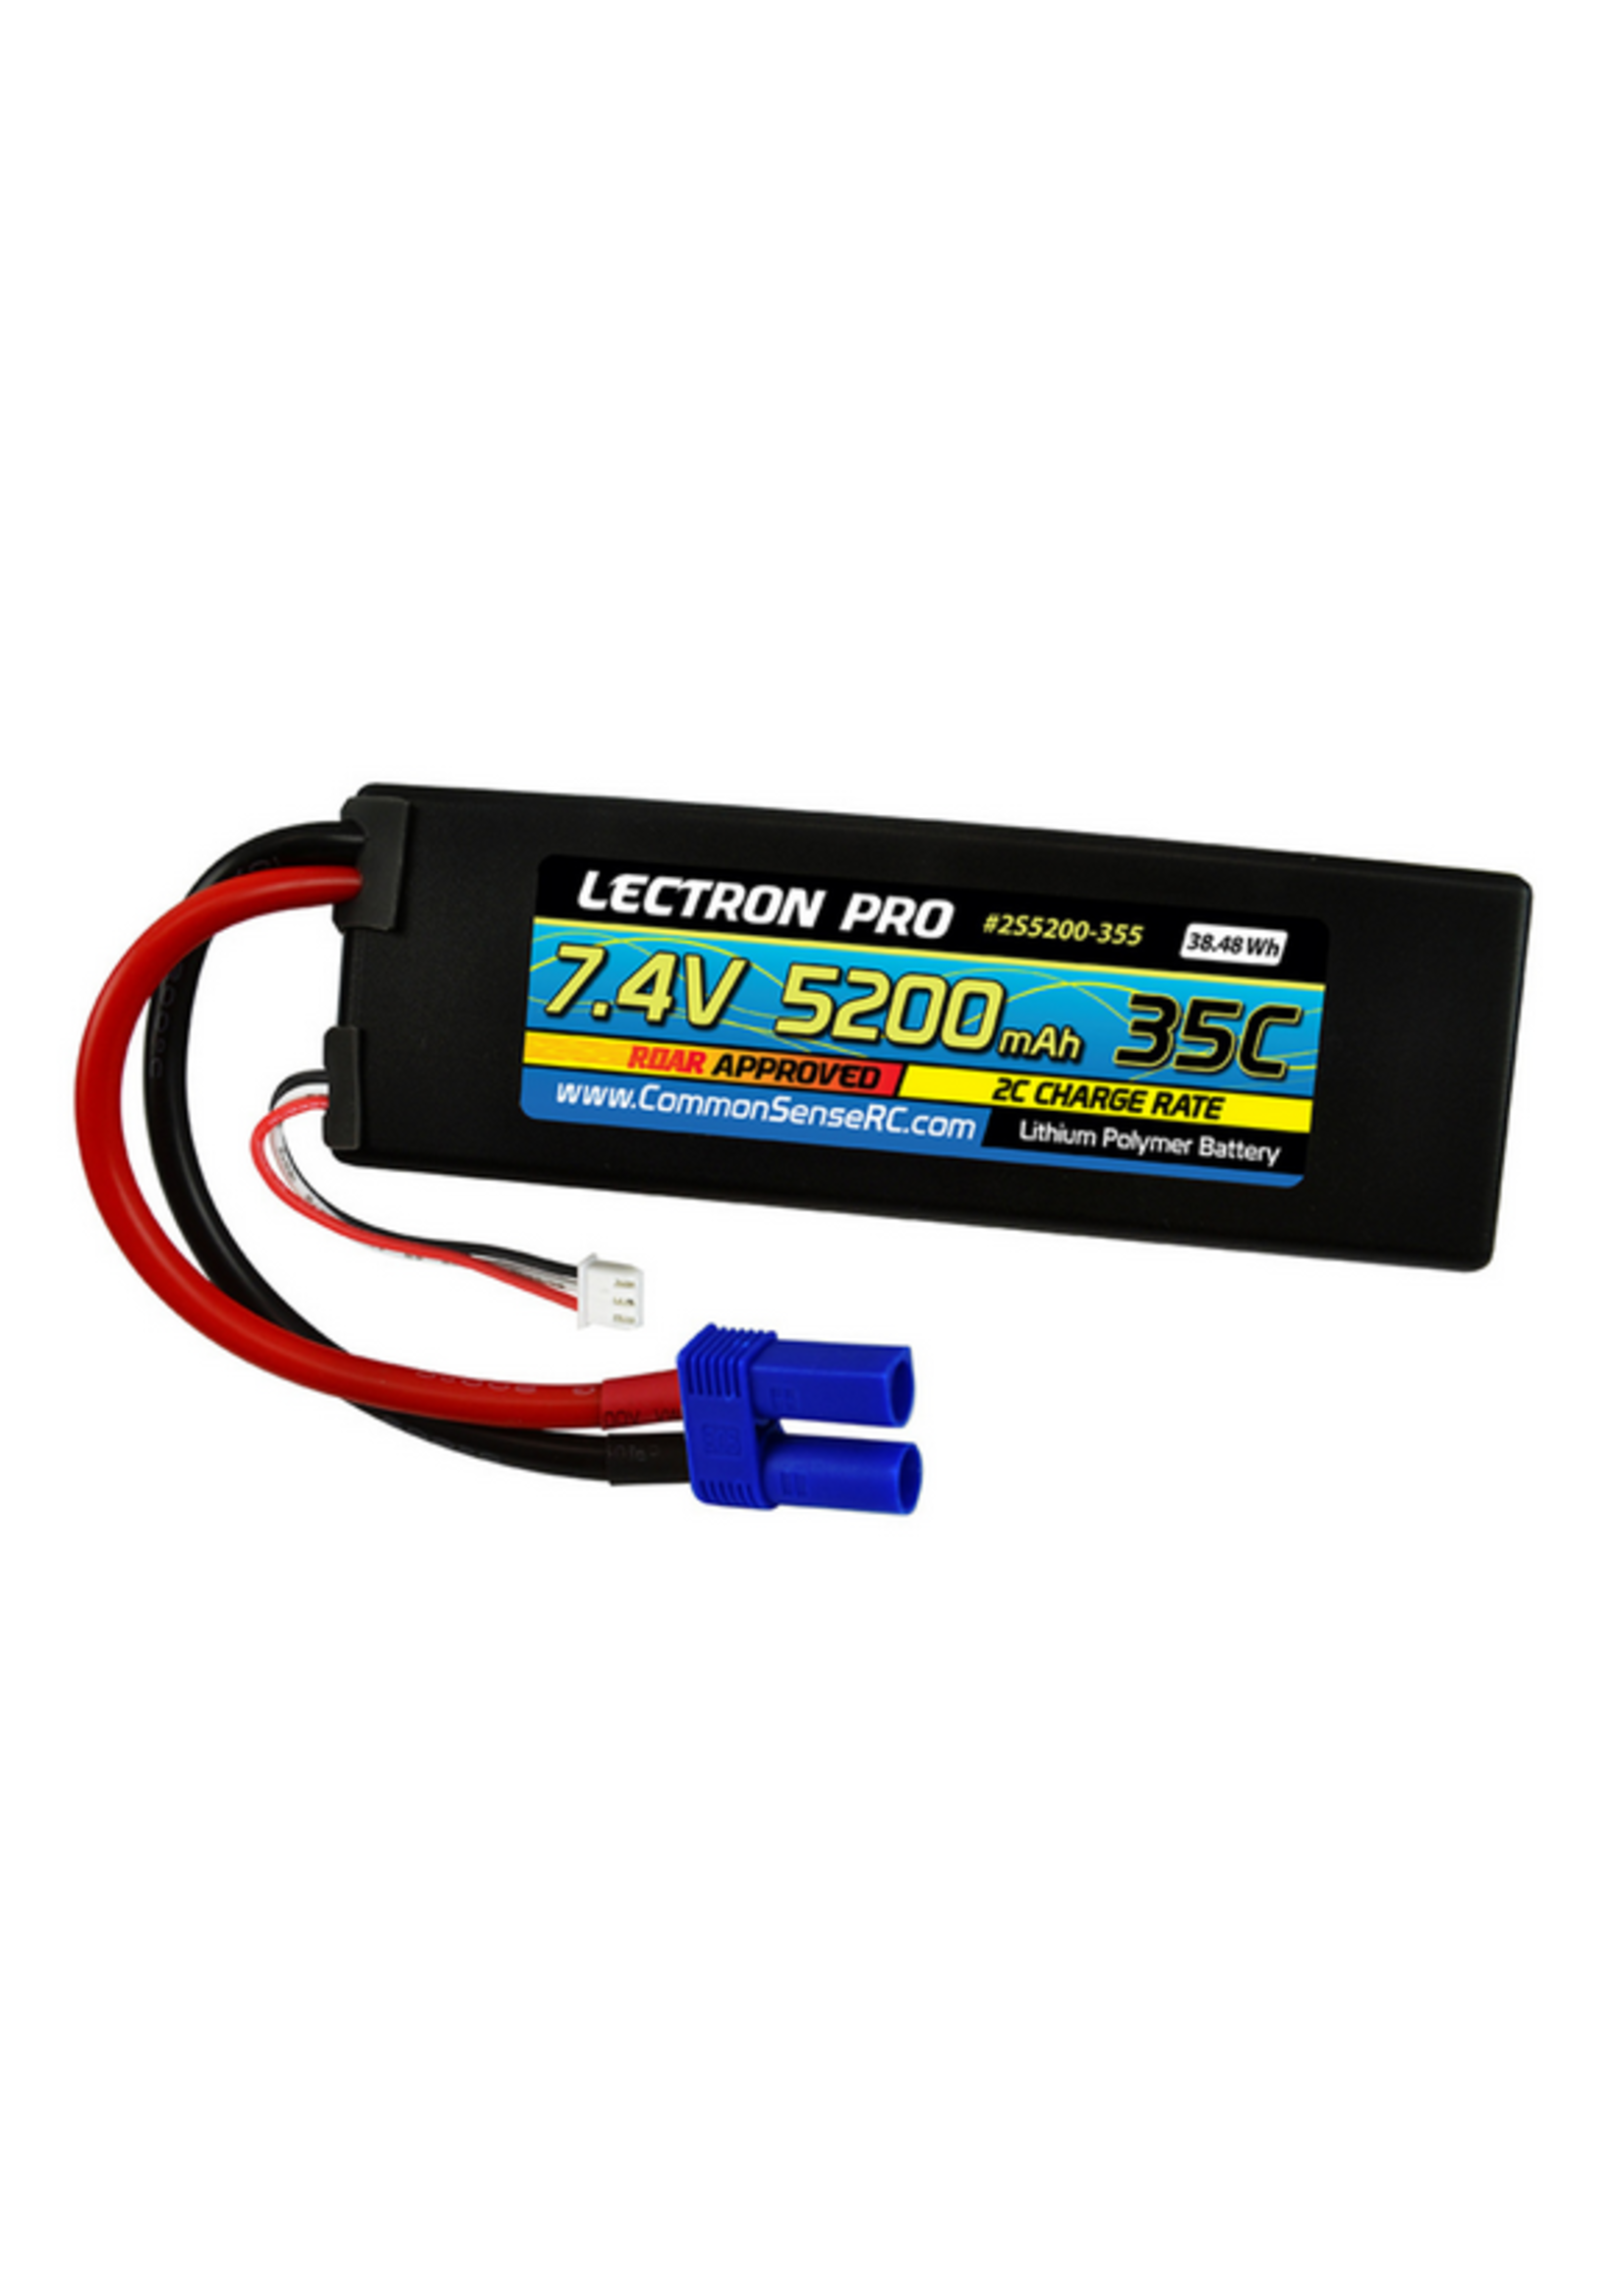 Lectron Pro CSRC2S5200-355 Lectron Pro 7.4V 5200mAh 35C Lipo Battery with EC5